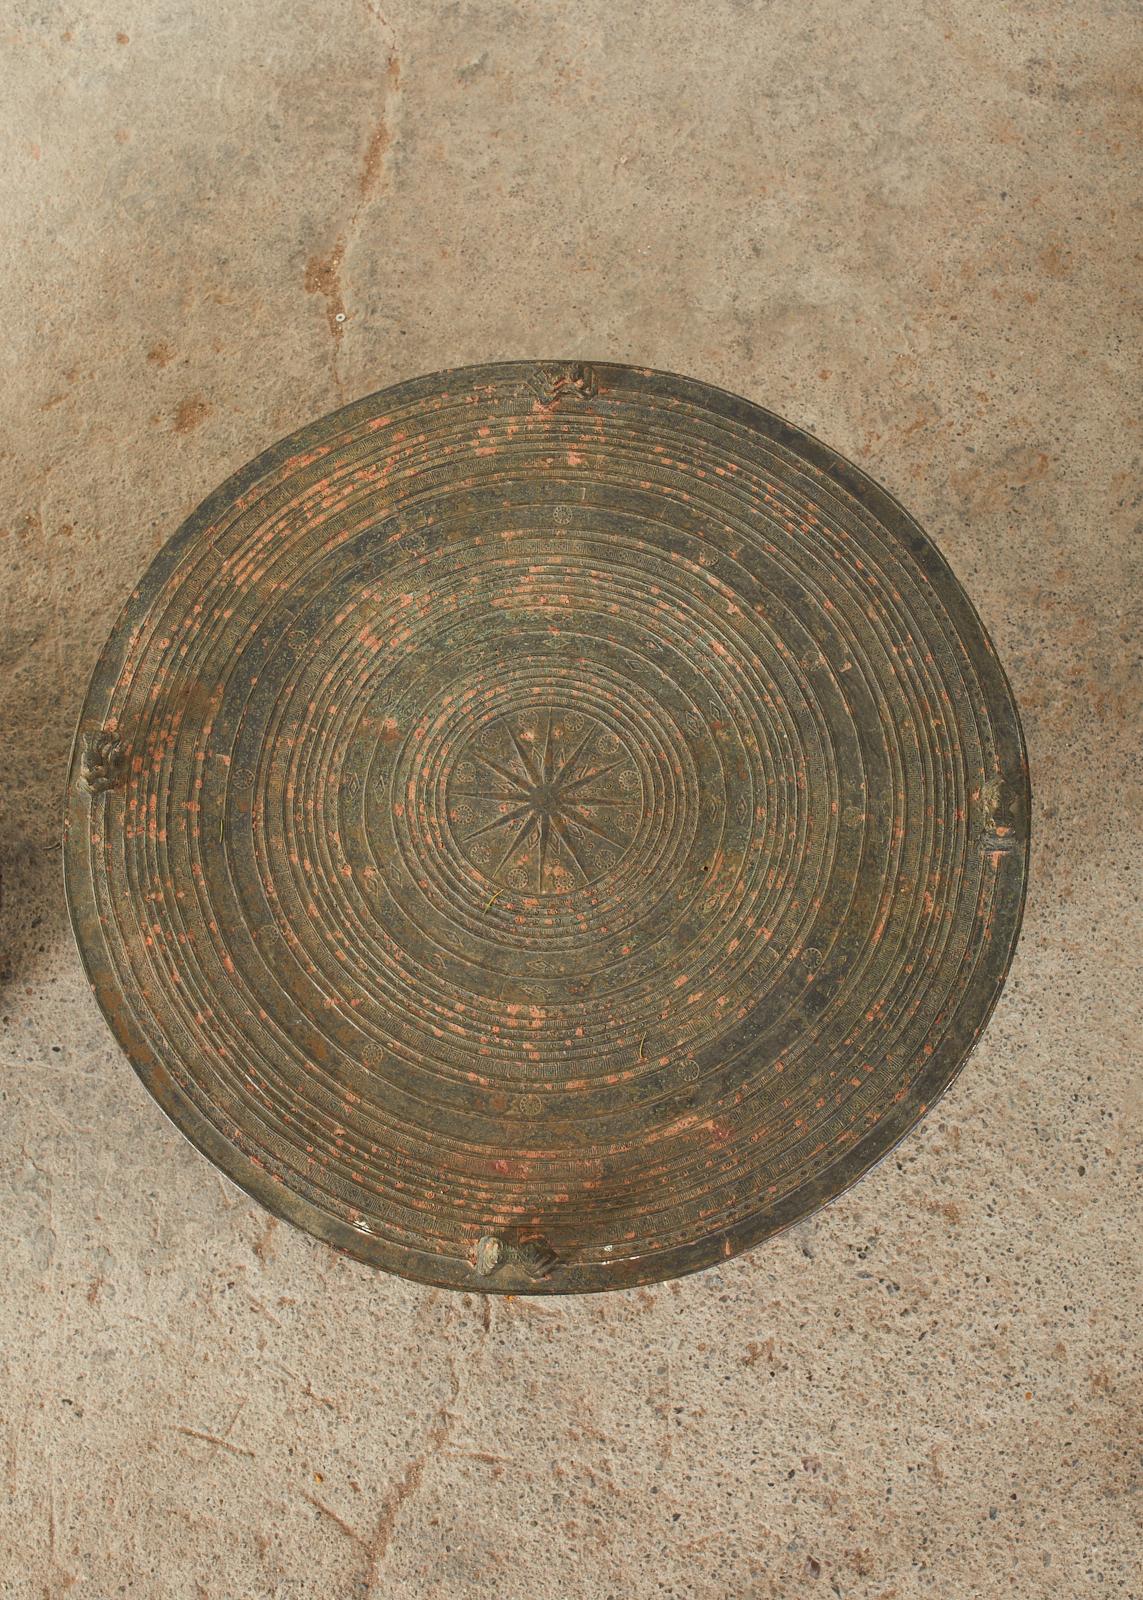 20th Century Pair of Burmese Bronze Rain Drums or Frog Drum Tables